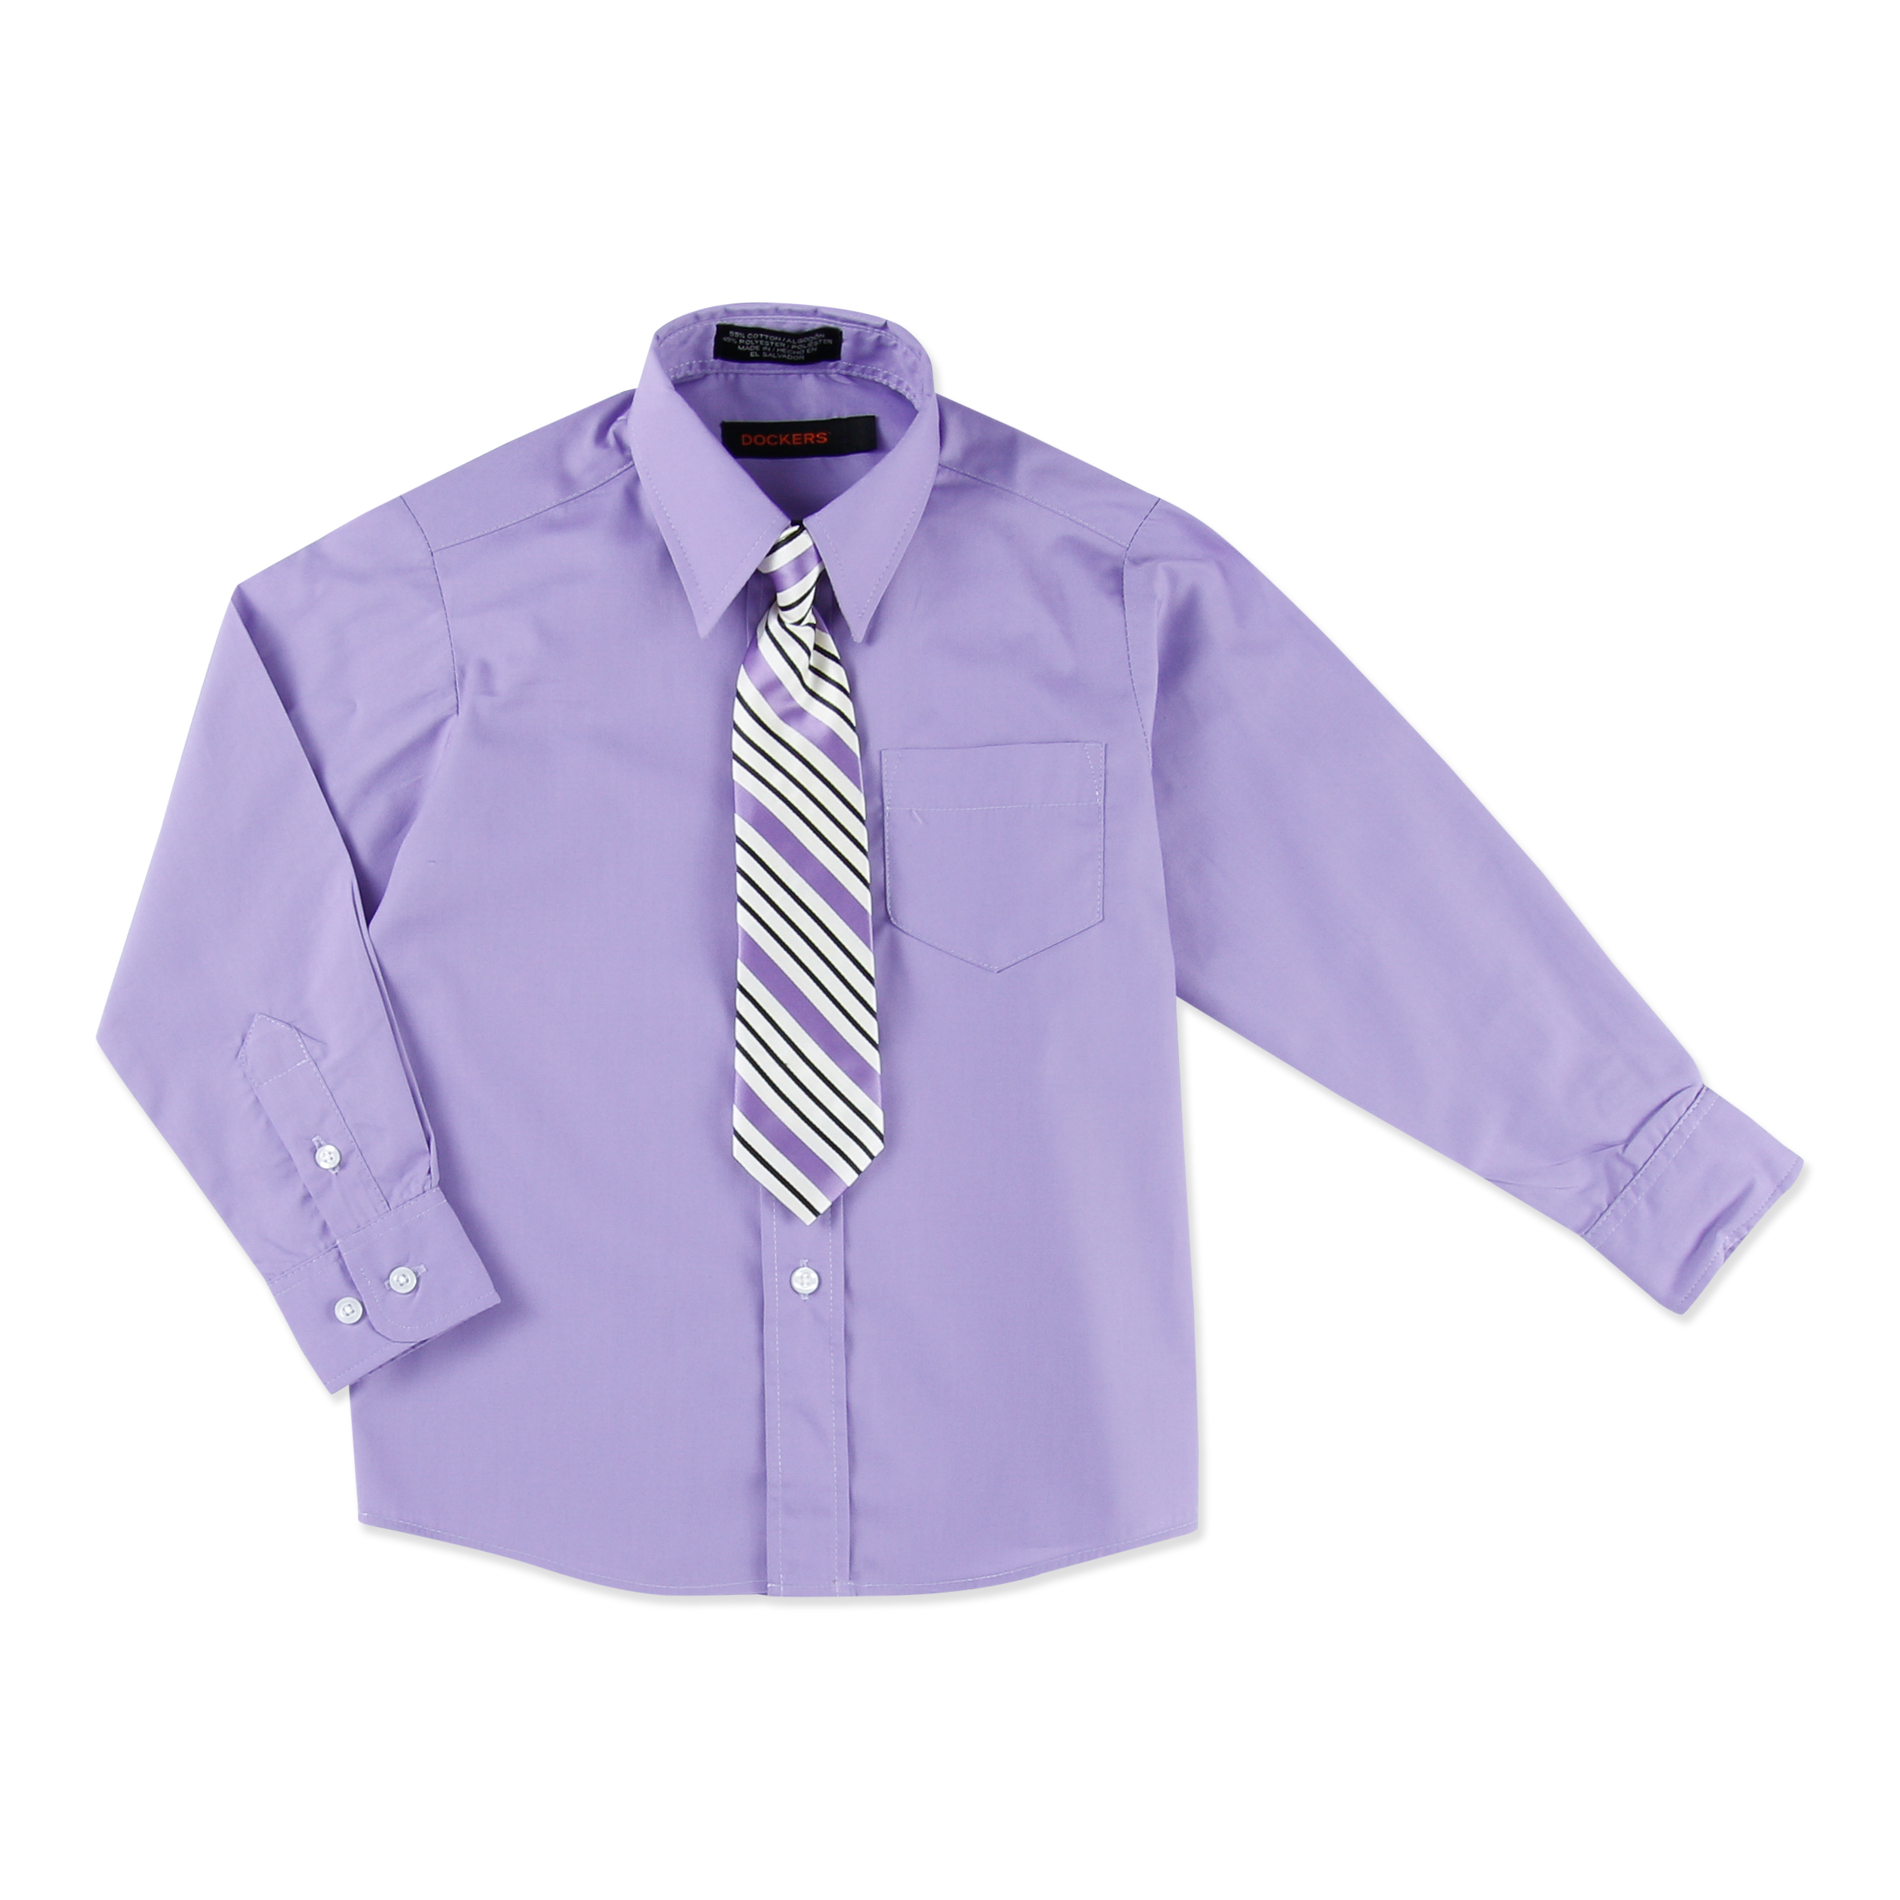 Dockers Boy's Dress Shirt & Clip-On Necktie - Striped